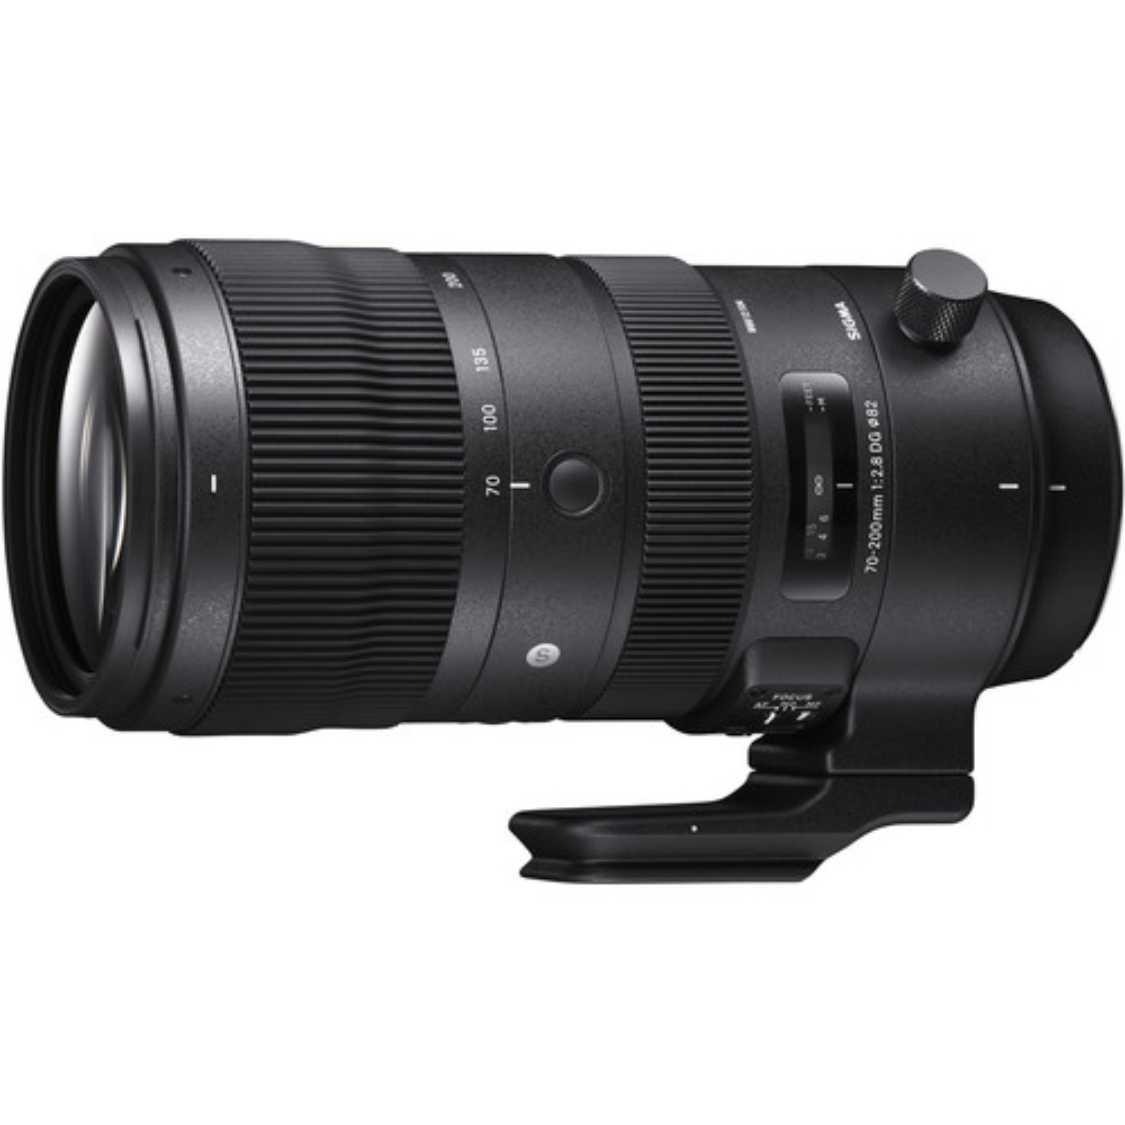 Sigma 70-200mm f2.8 DG OS HSM Sport Lens (Nikon F-mount)